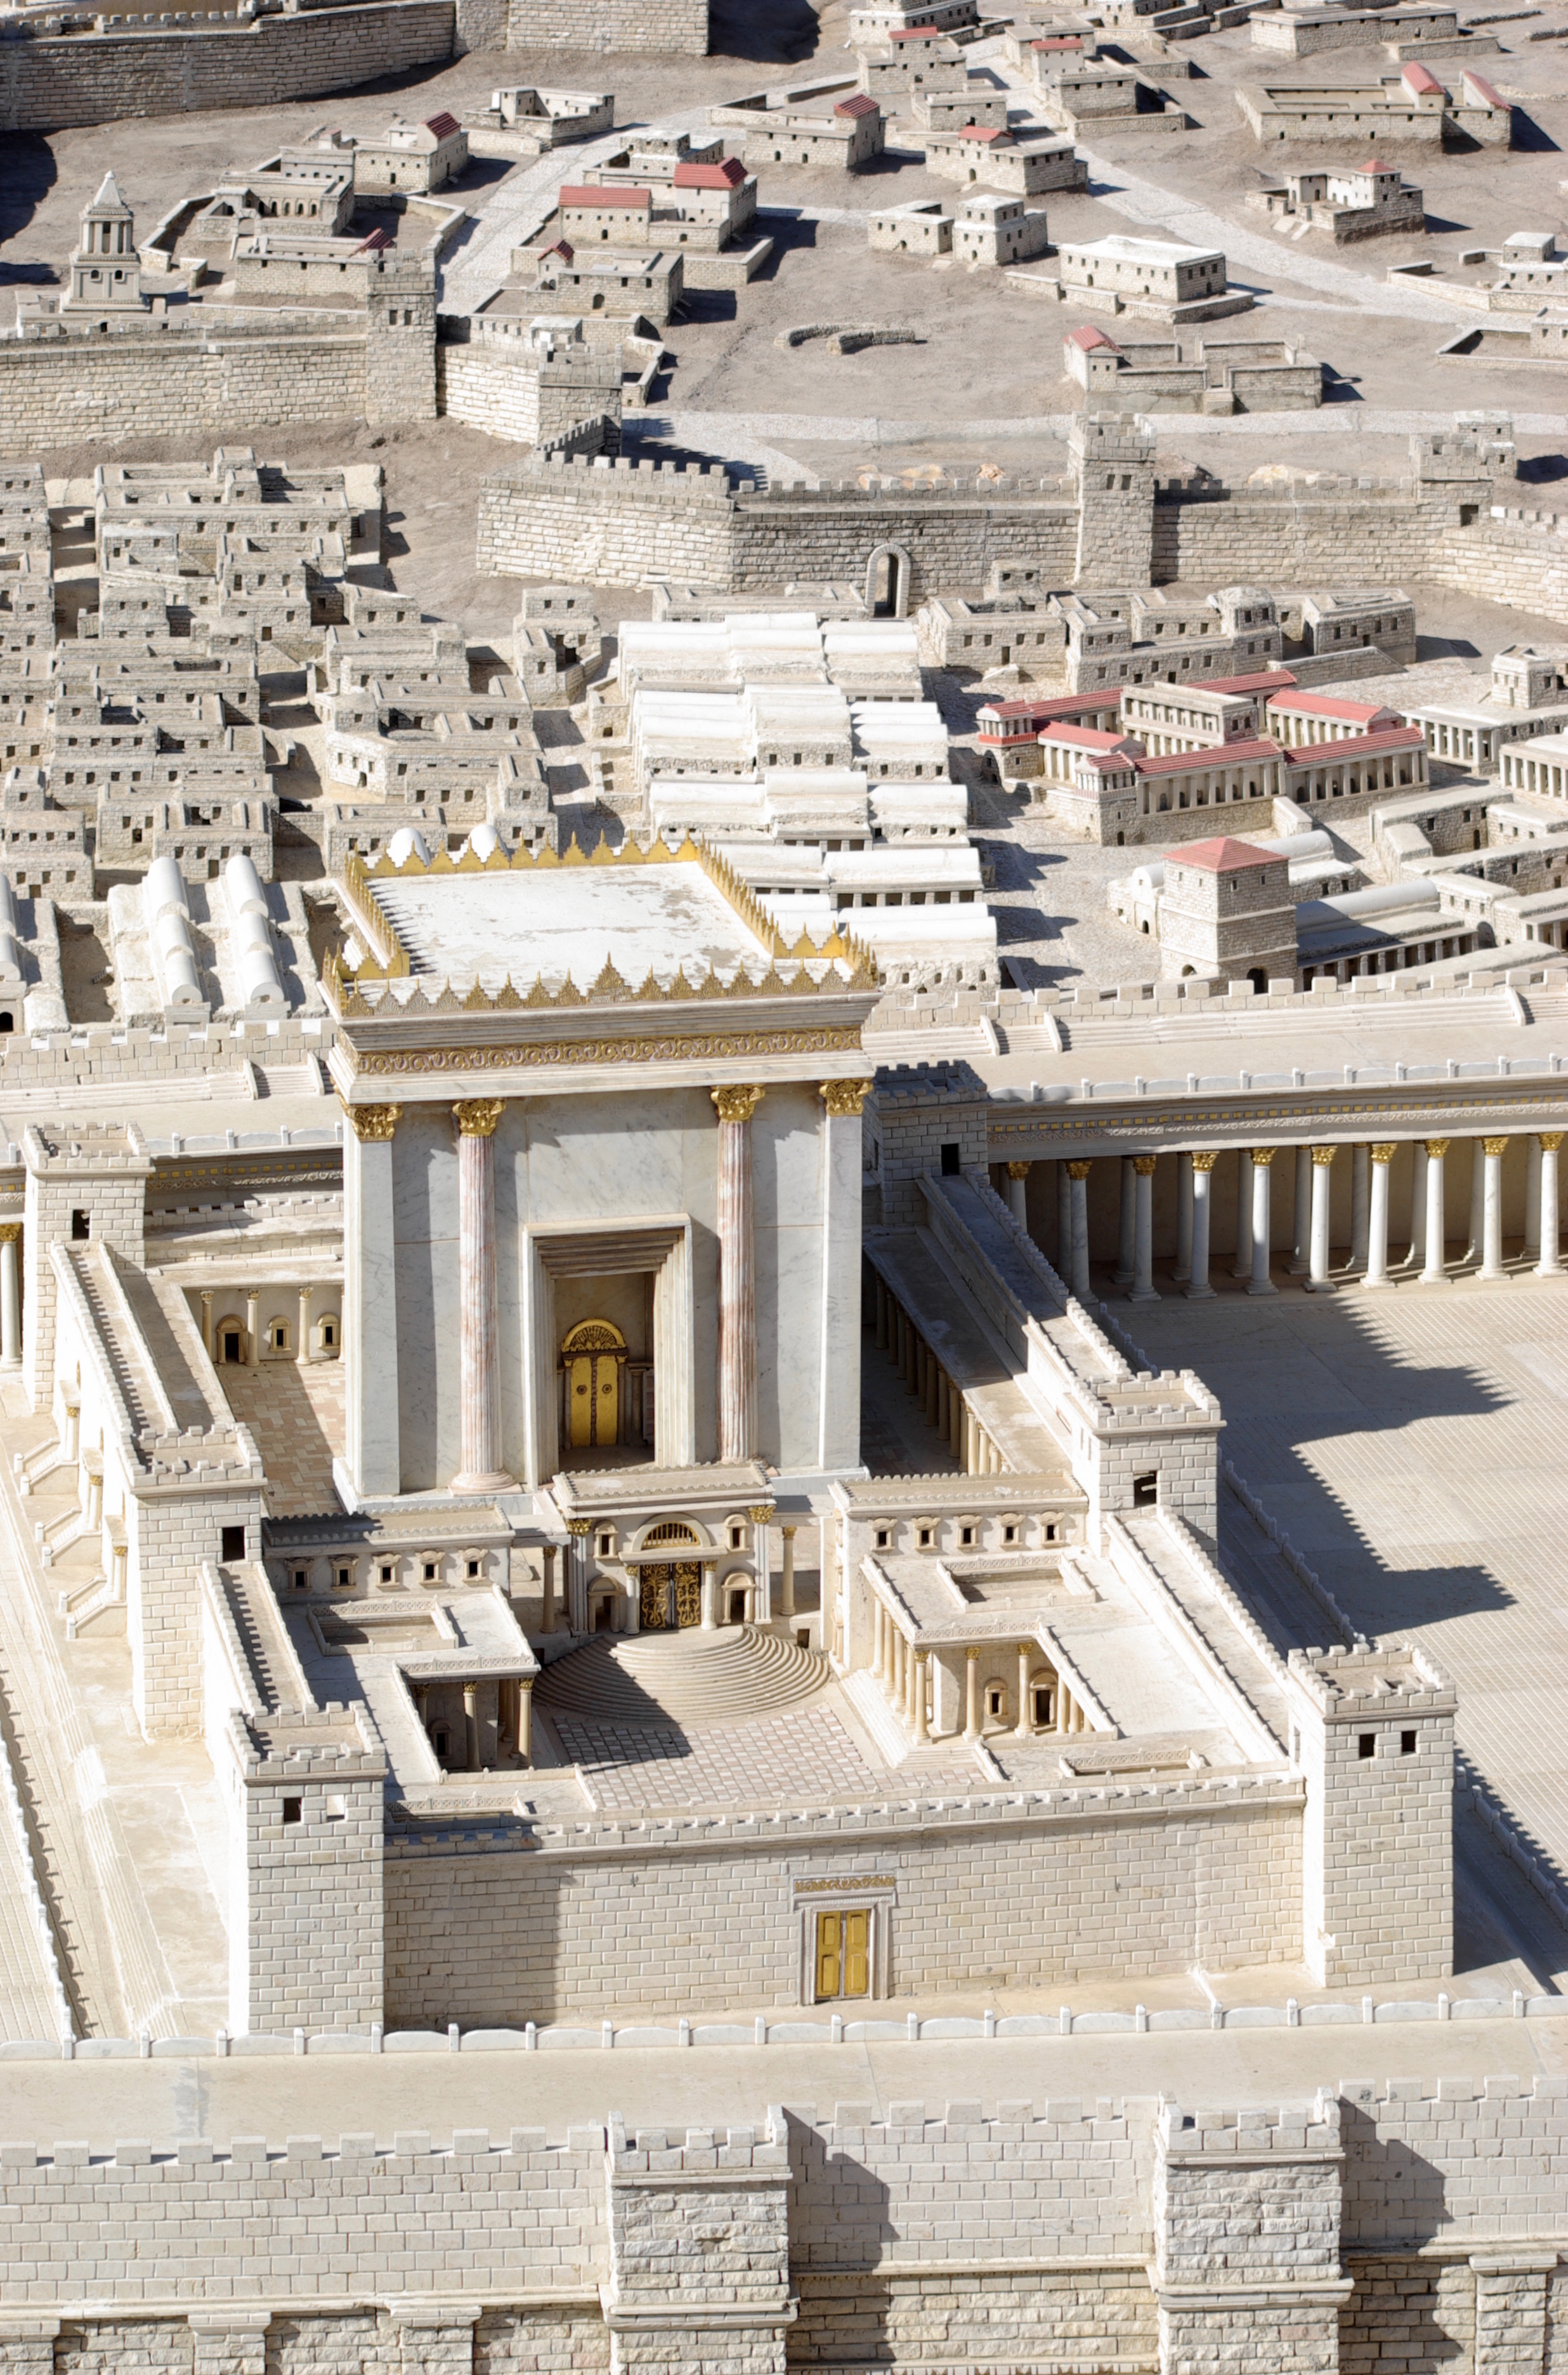 Temple in Jerusalem - Wikipedia